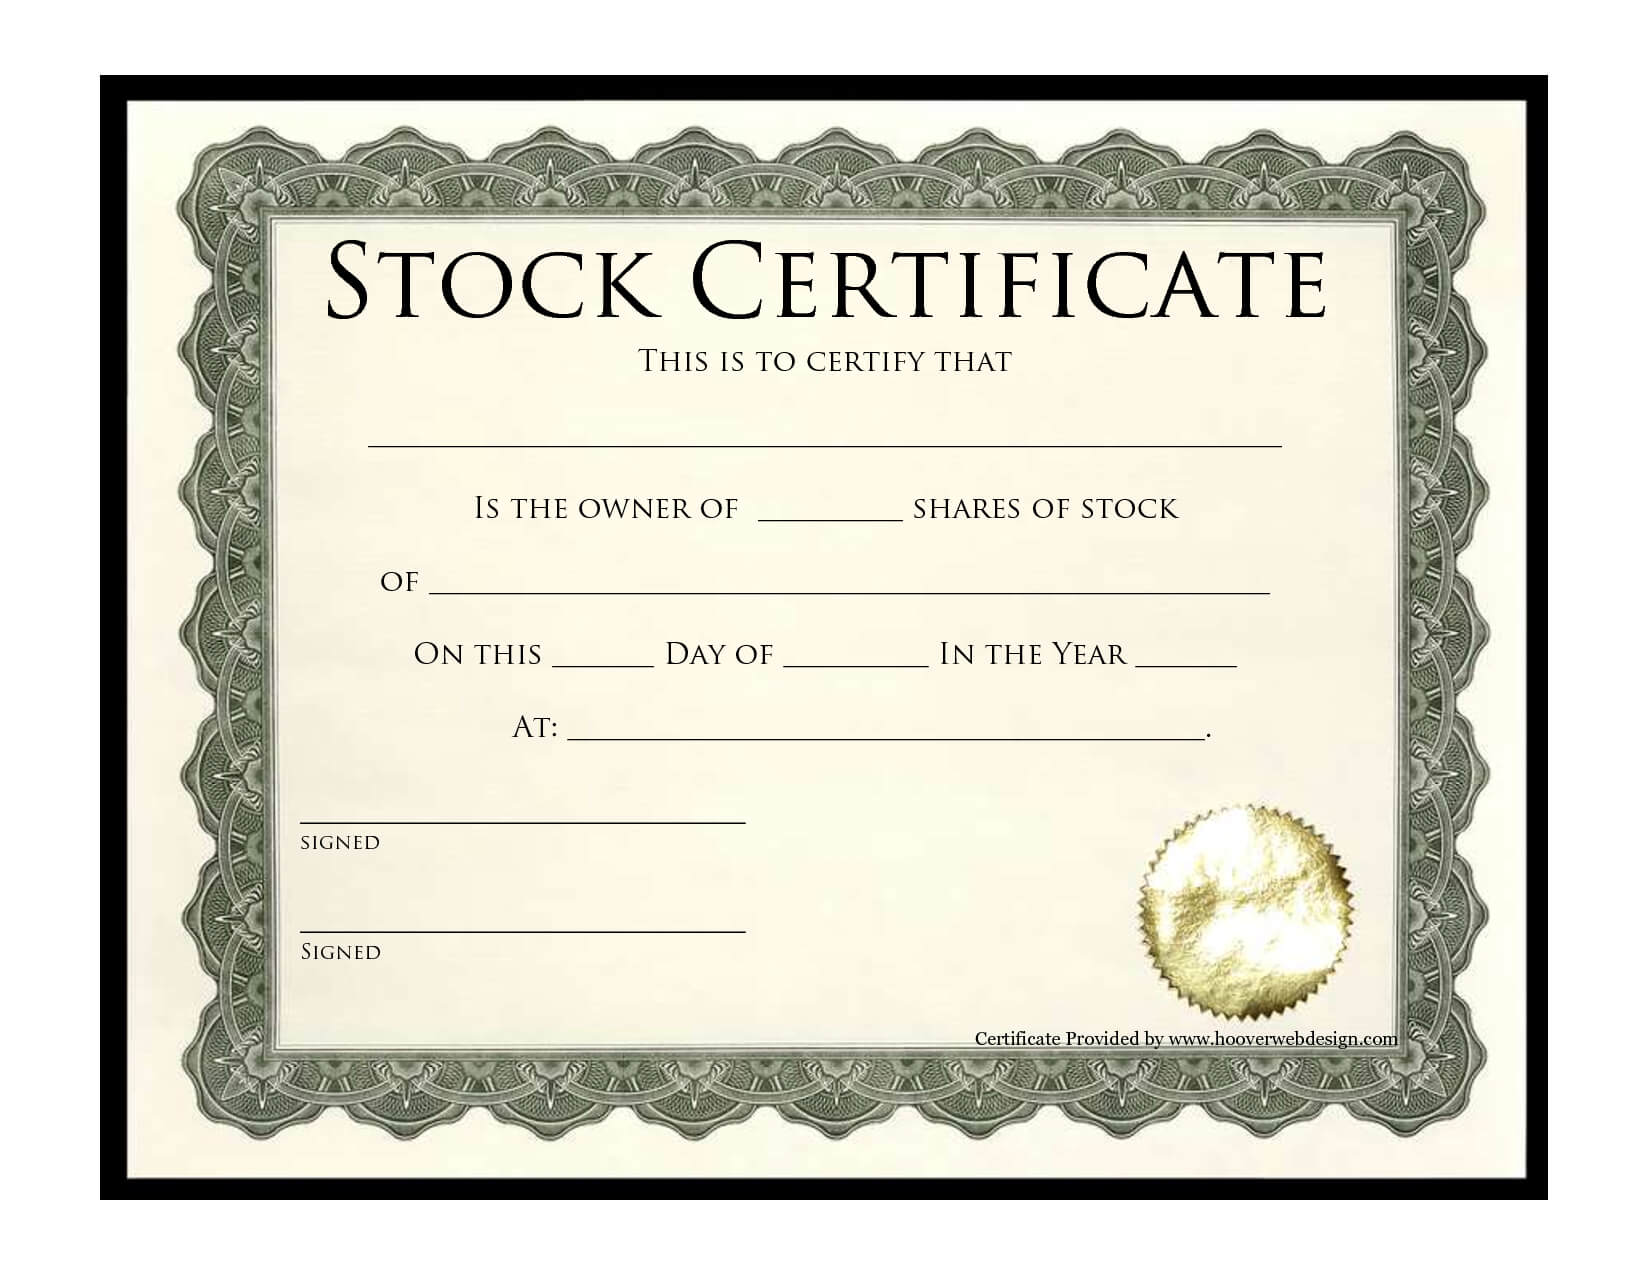 003 Template Ideas Free Stock Certificate Remarkable With Free Stock Certificate Template Download